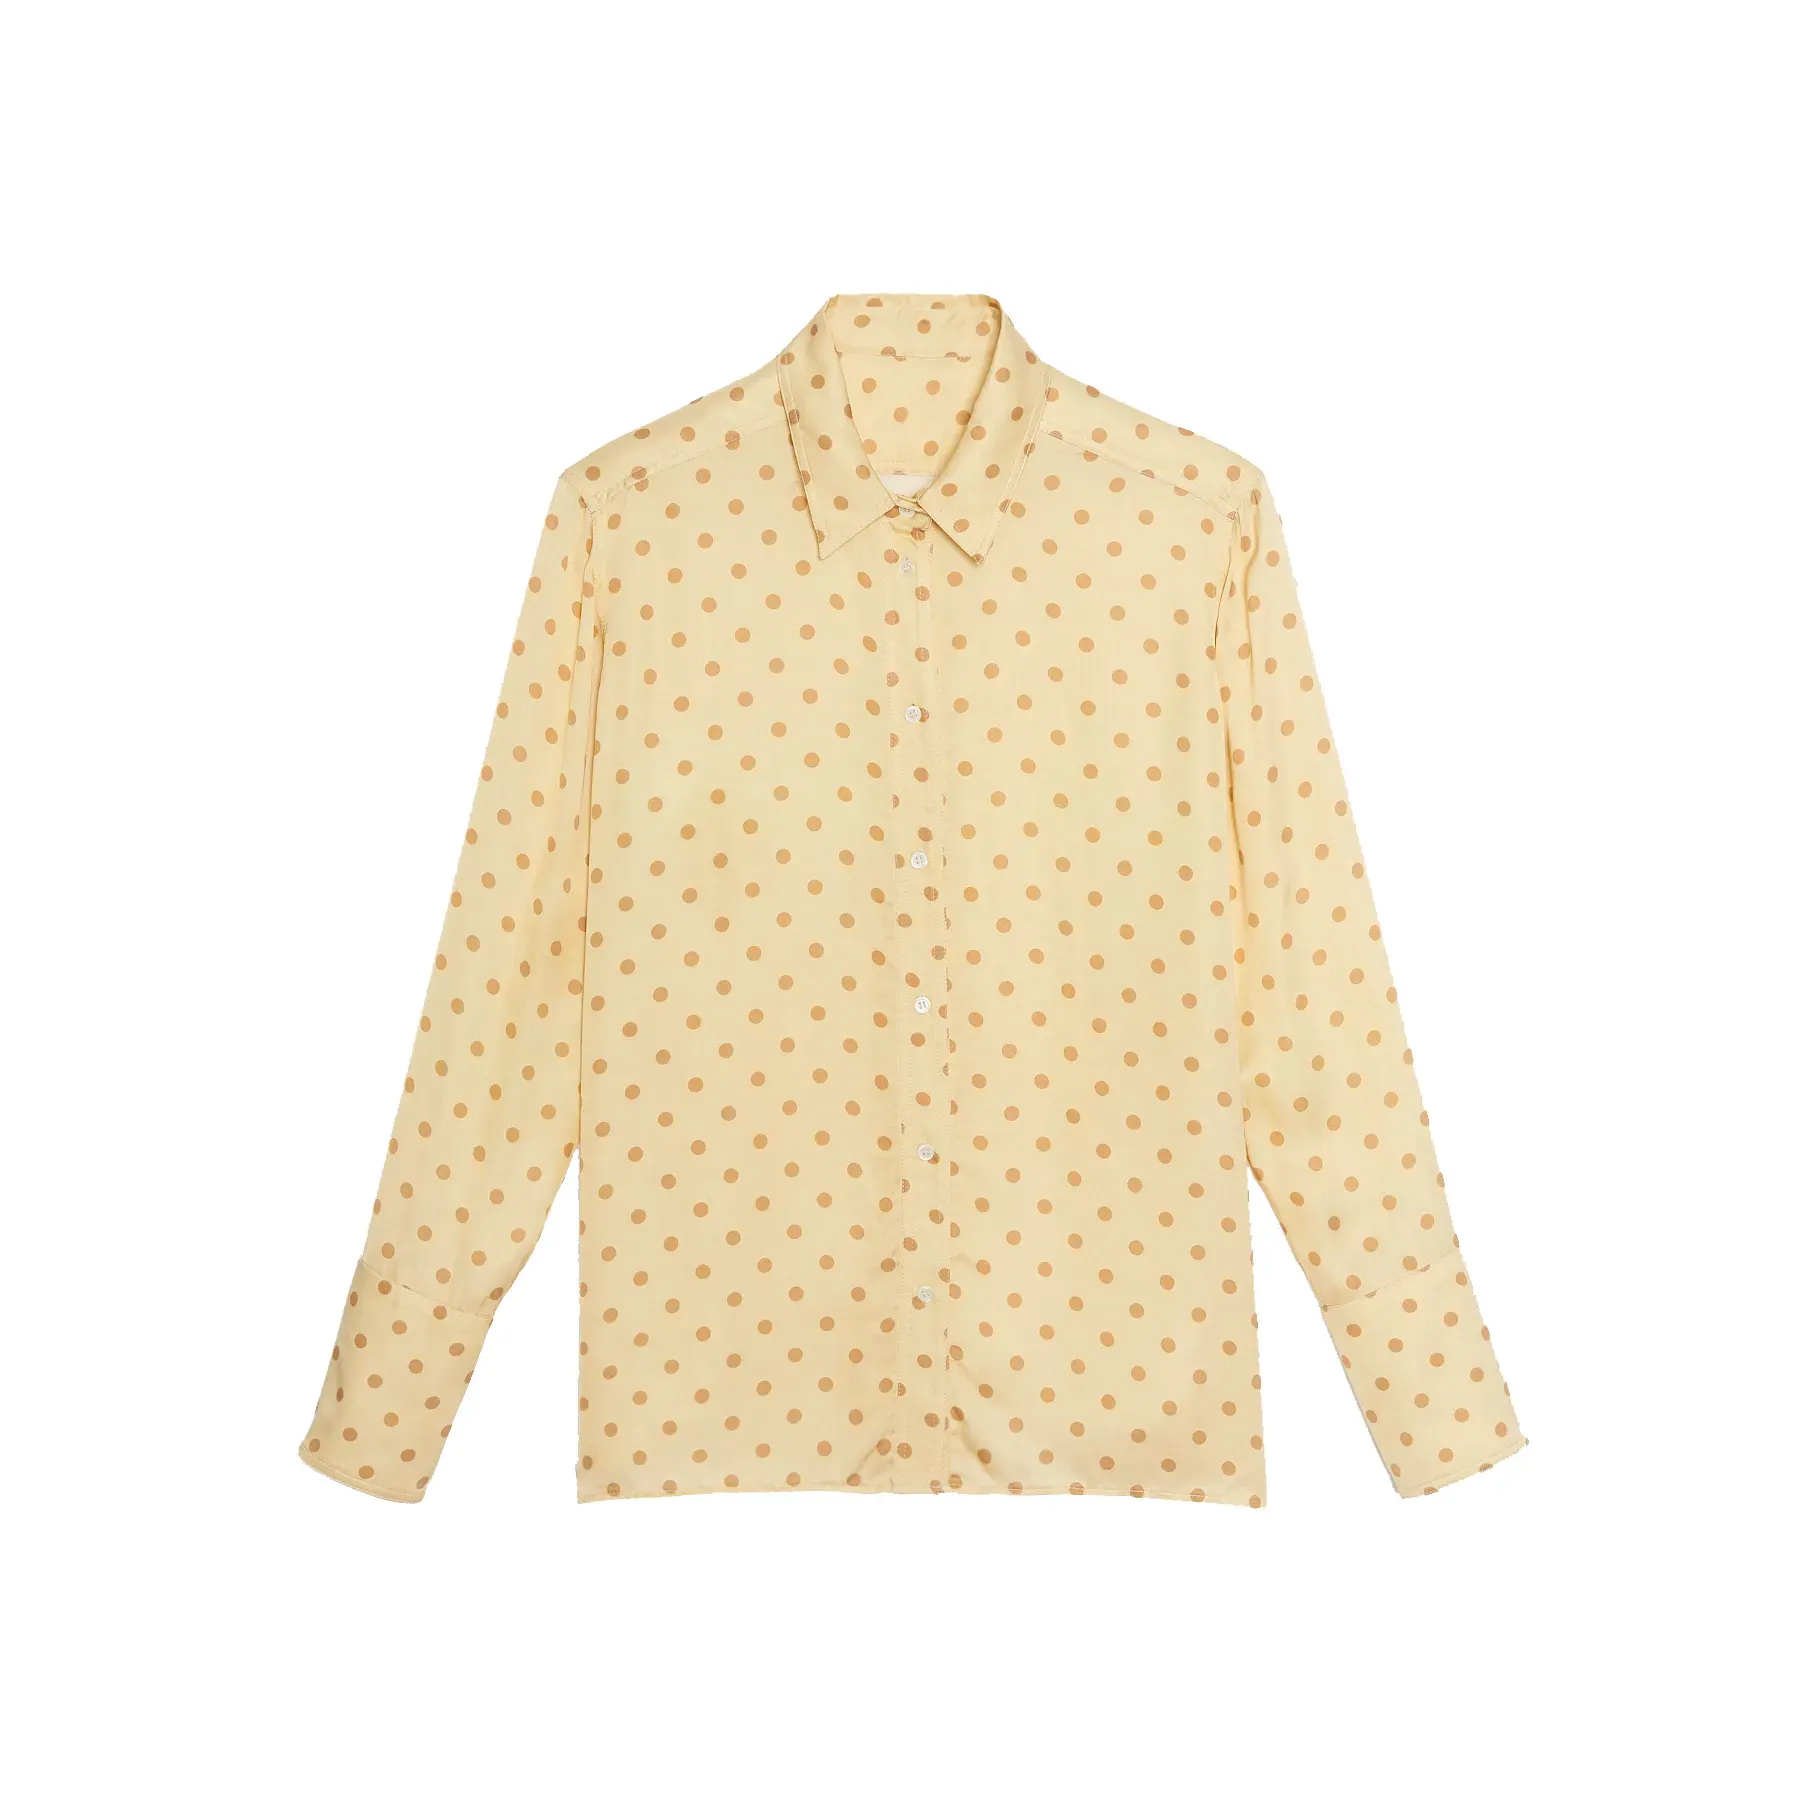 Moda mujer ropa fabricantes proveedor personalizado manga larga punto camisas casuales blusa mujer elegante Tops Blusa de gasa